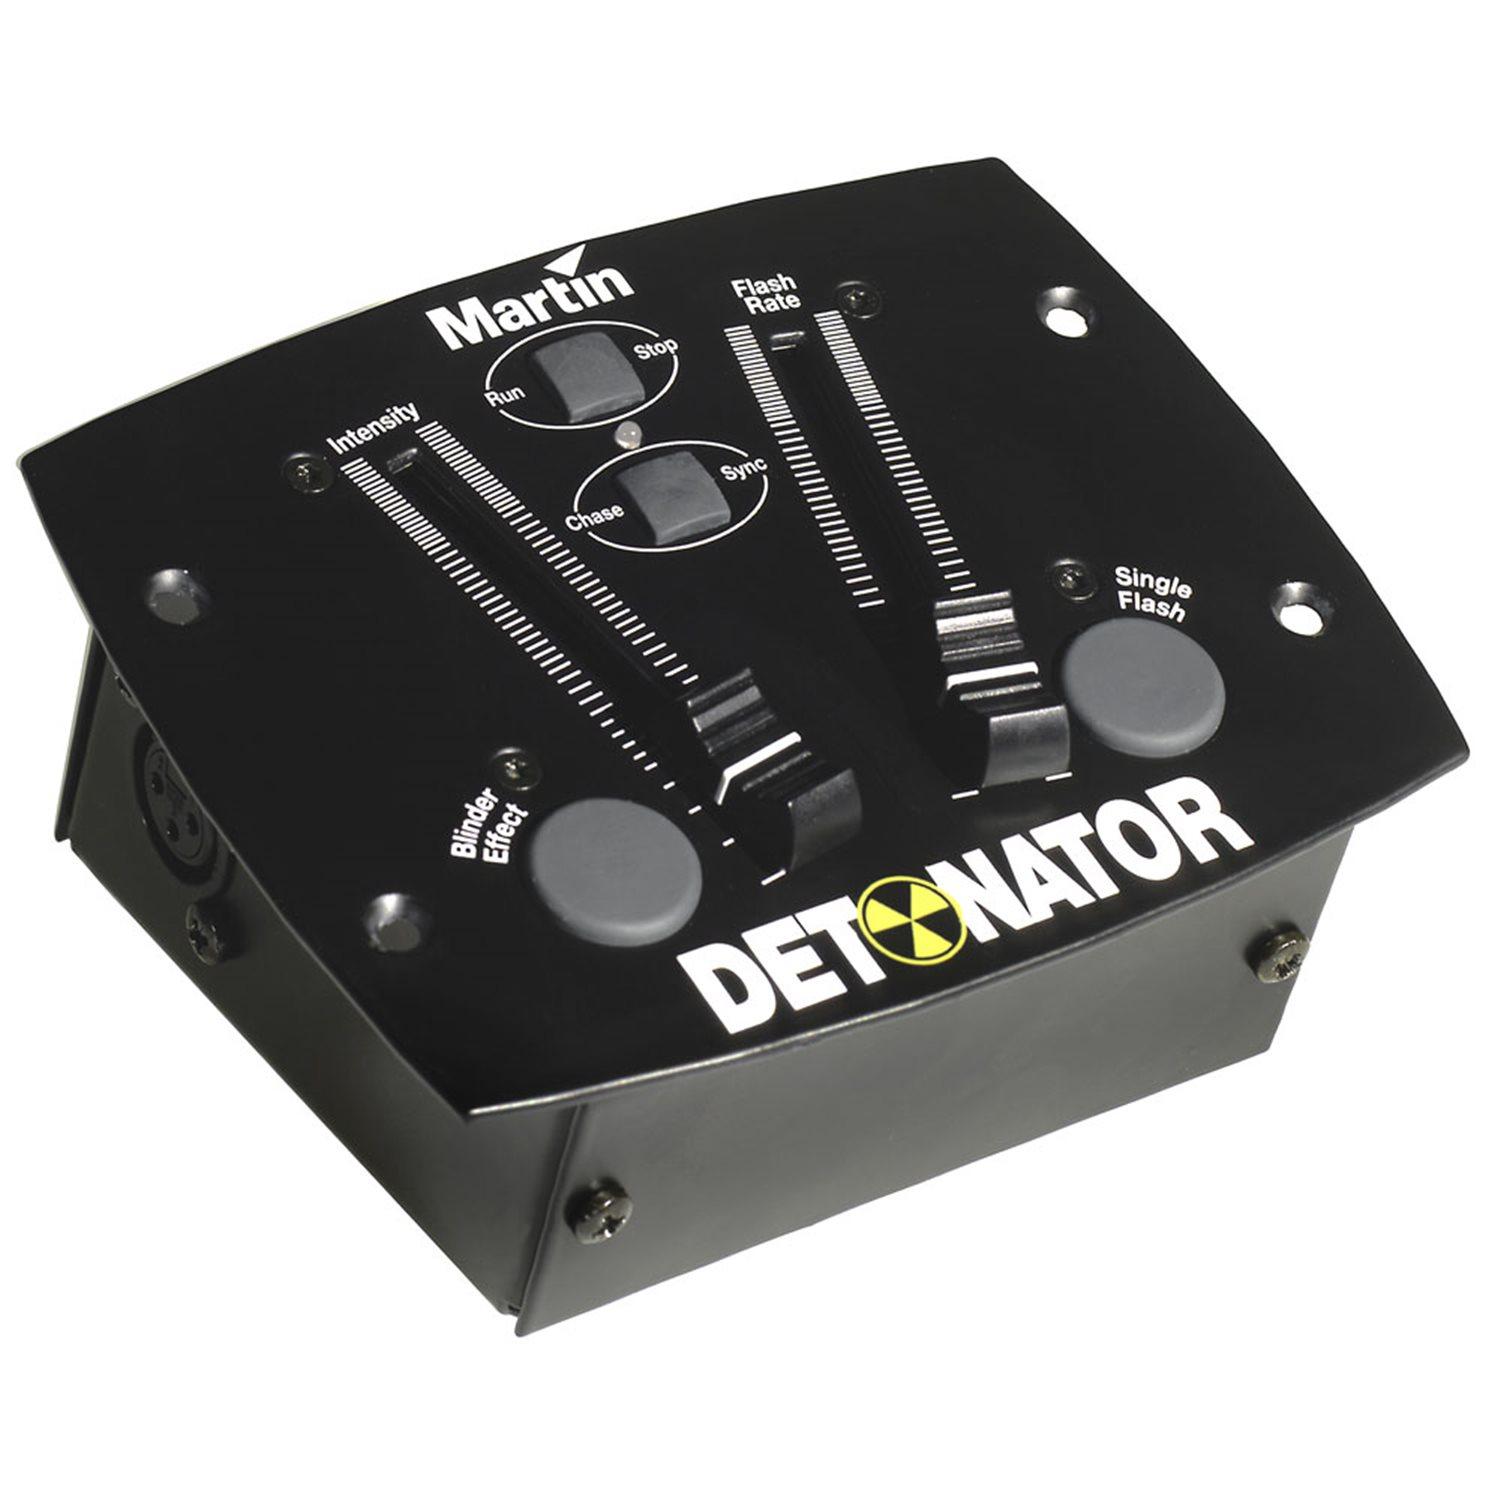 Контроллер DMX MARTIN Pro DETONATOR